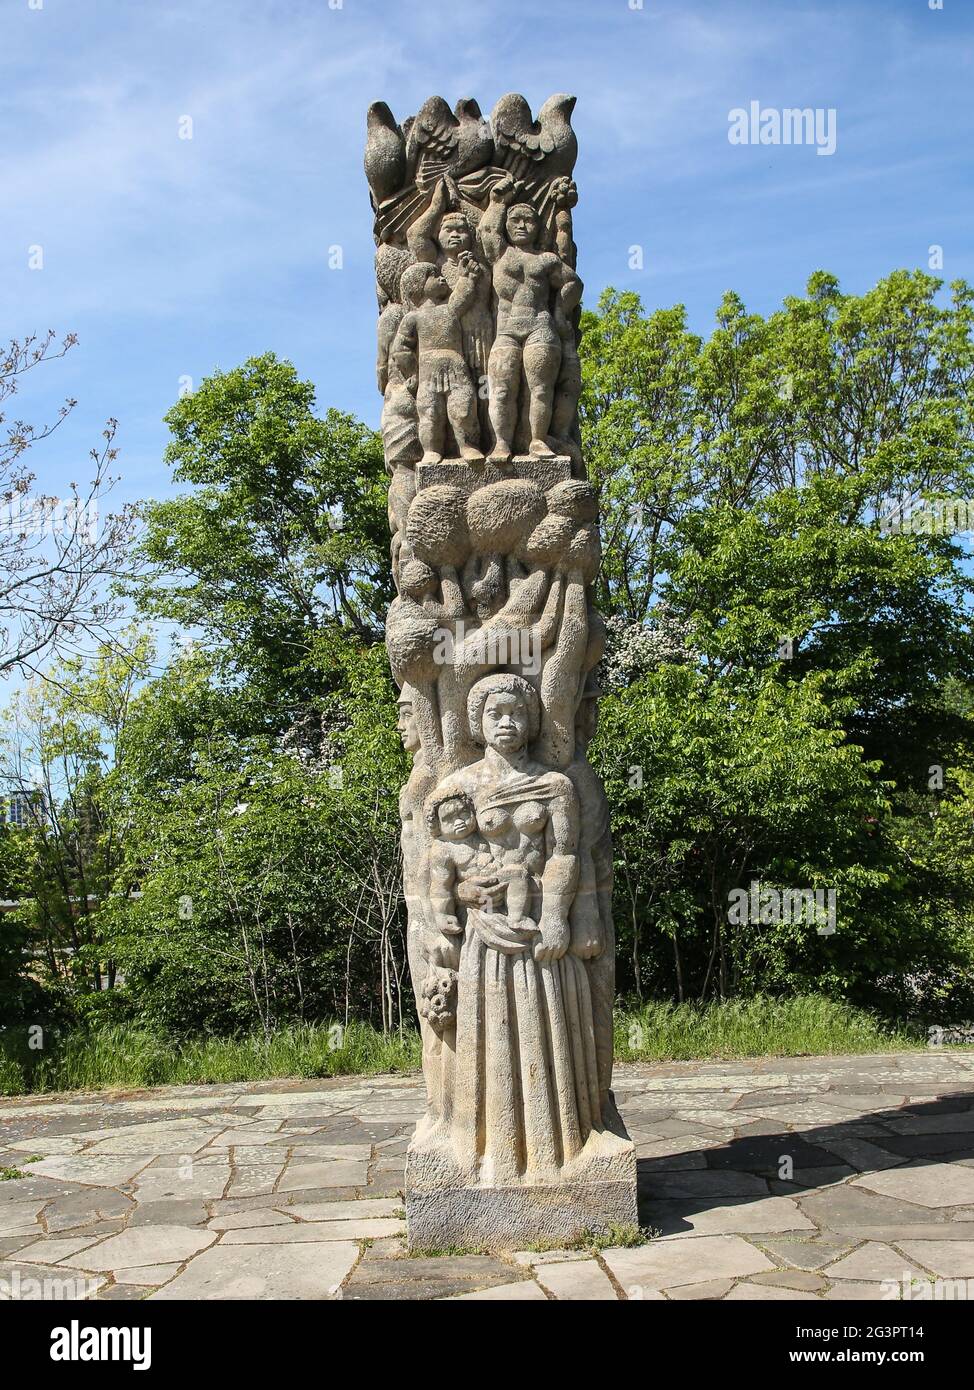 Stele der Völkerfreundschaft am LukashÃ¼gel in Magdeburg Stockfoto